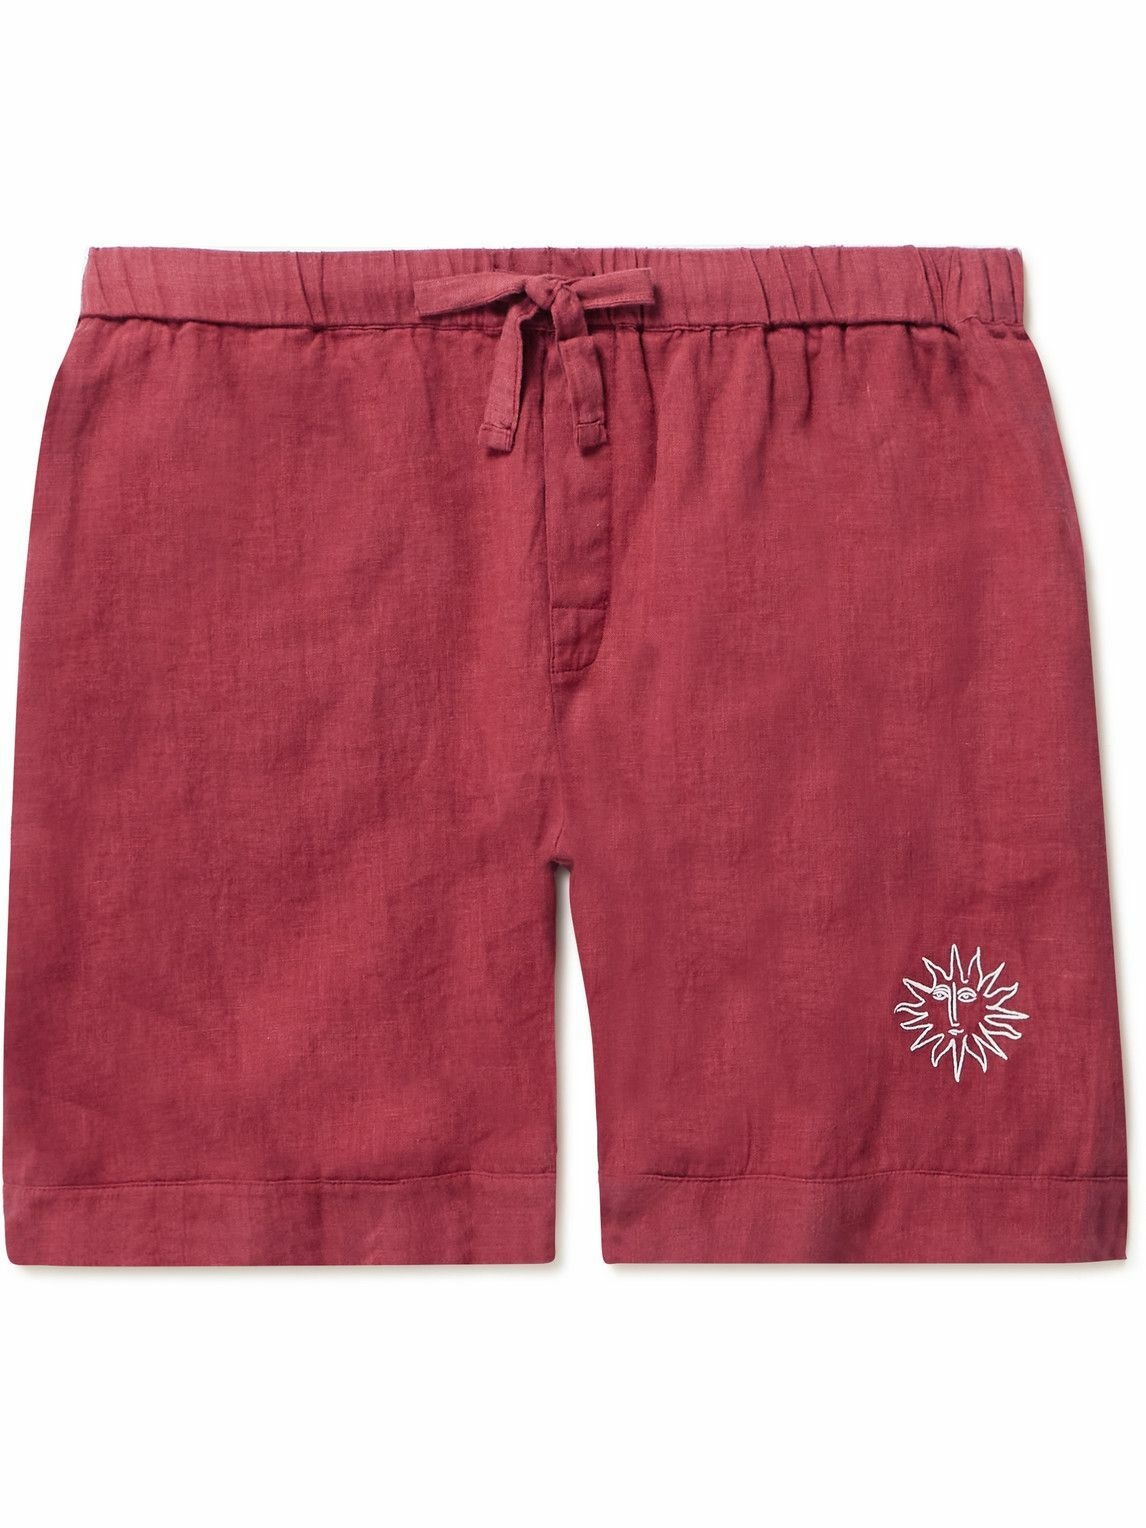 Photo: Desmond & Dempsey - Embroidered Linen Pyjama Shorts - Red